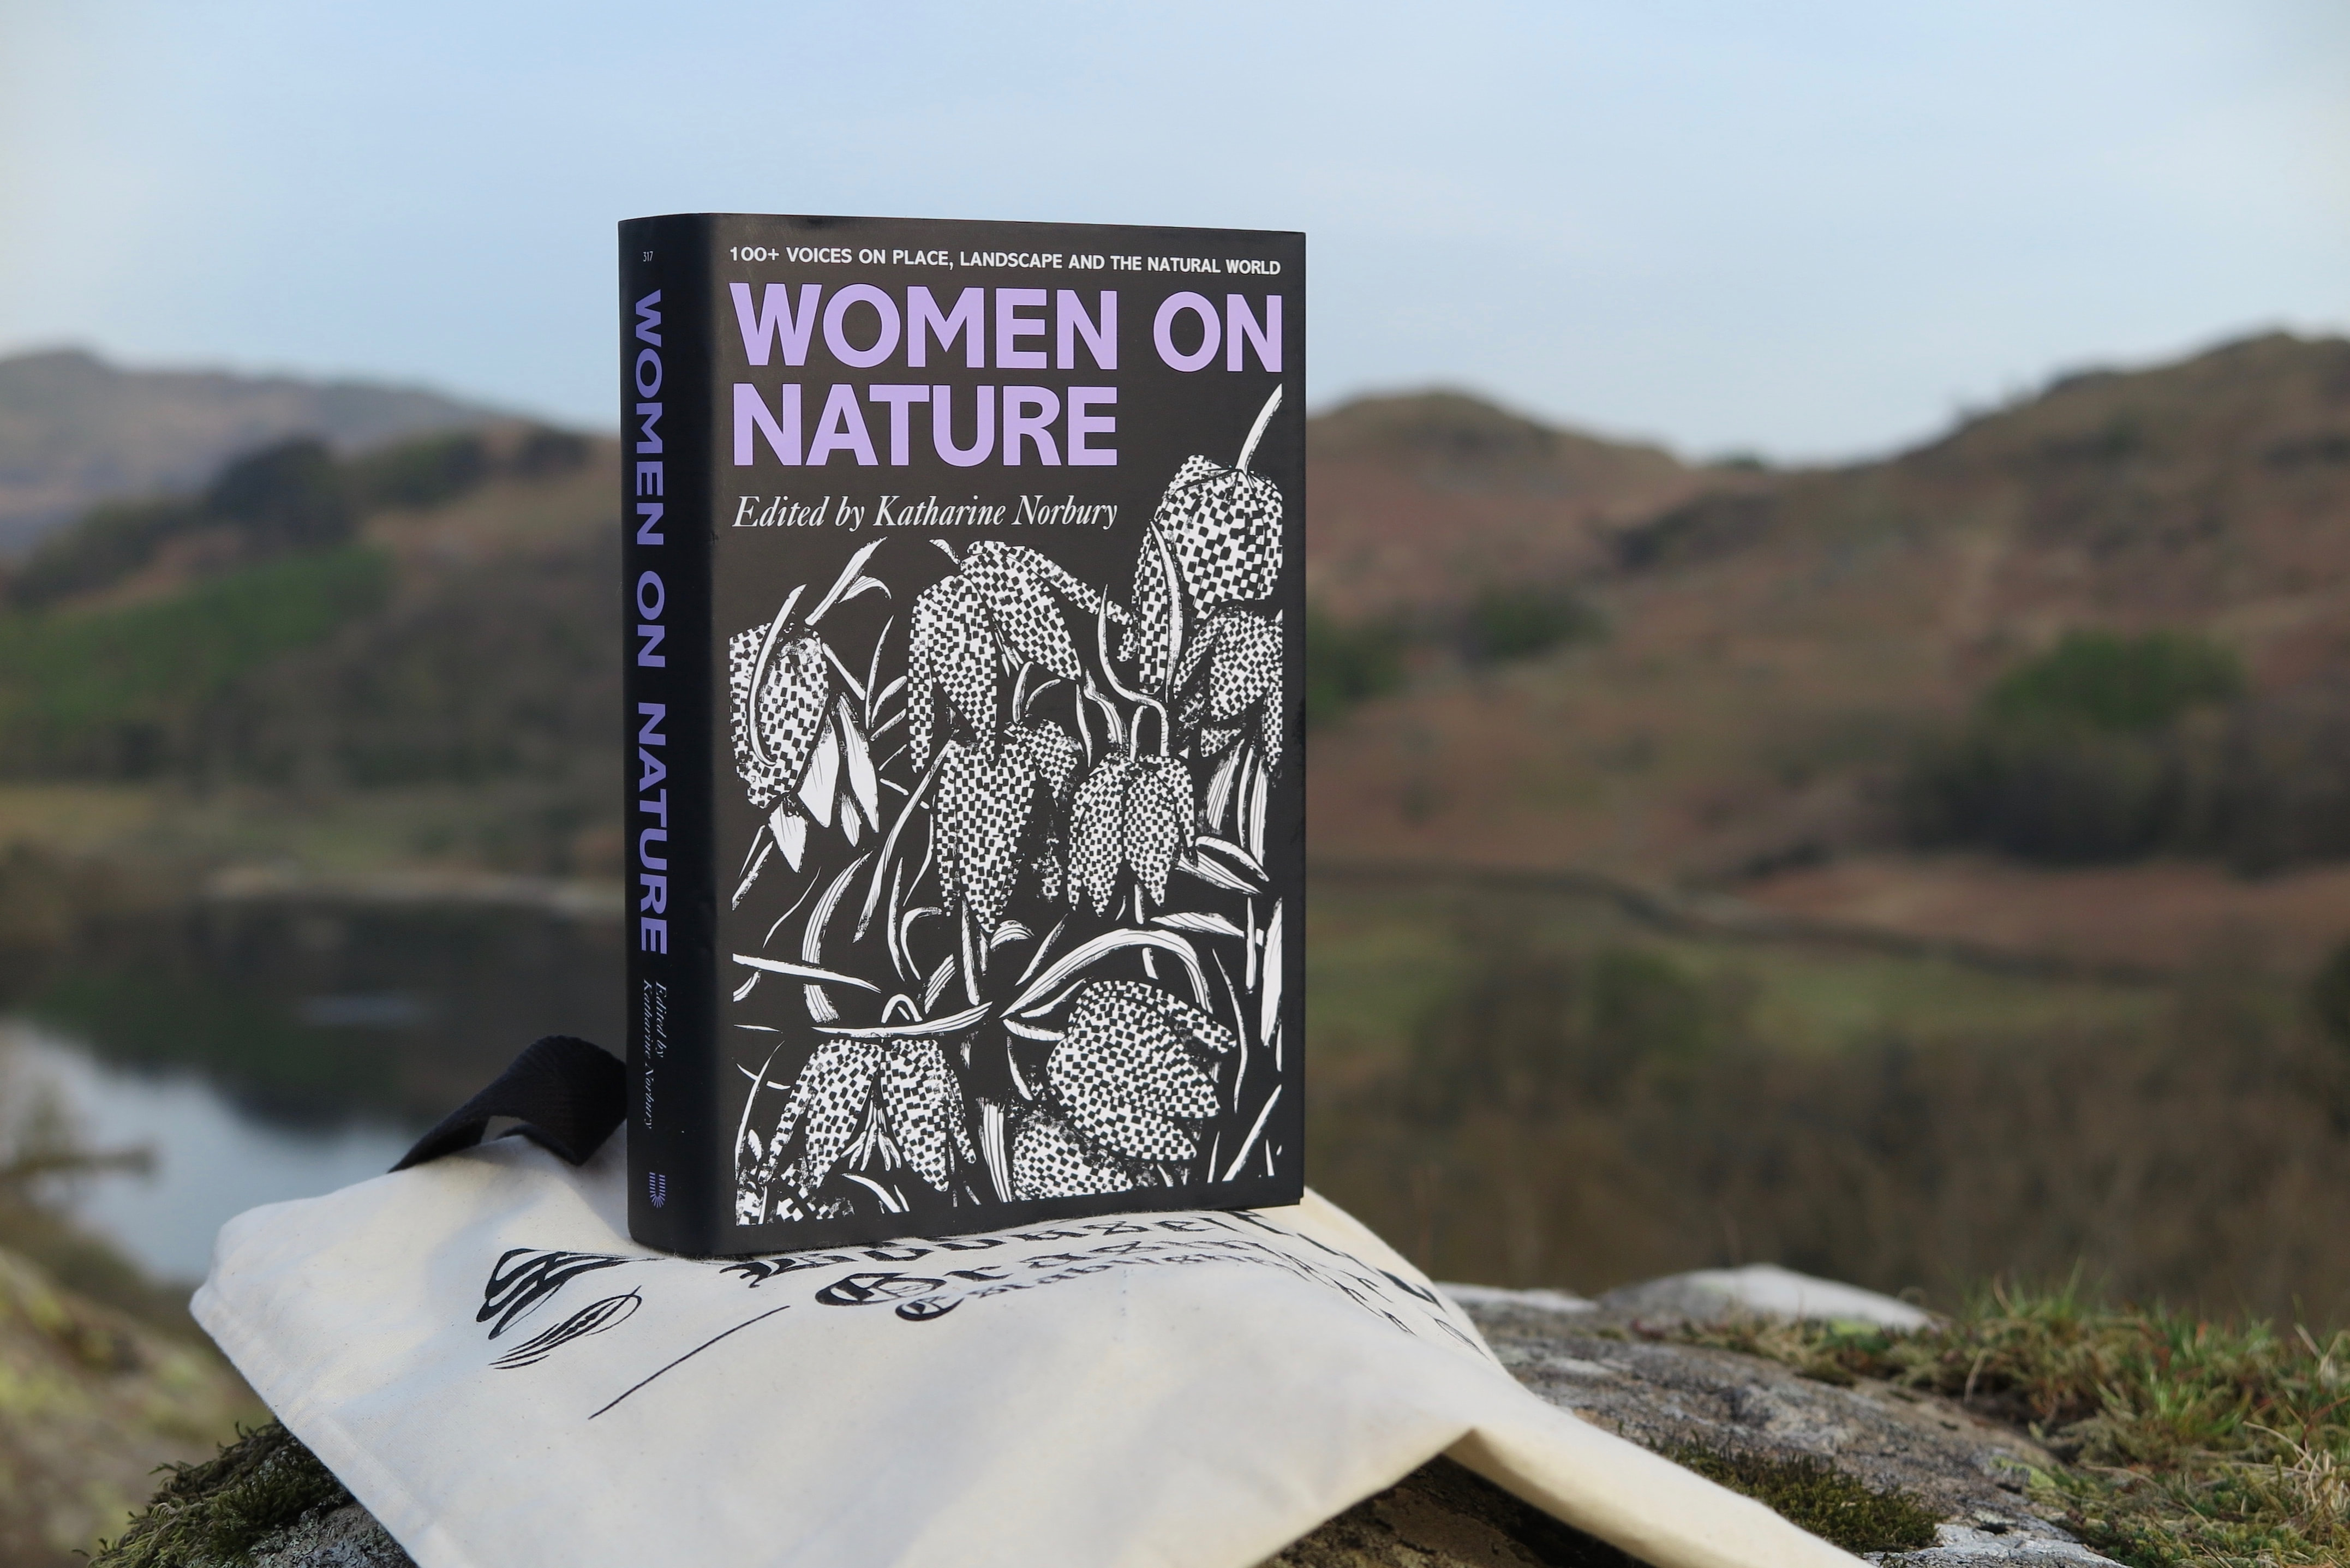 Women on Nature by Katharine Norbury